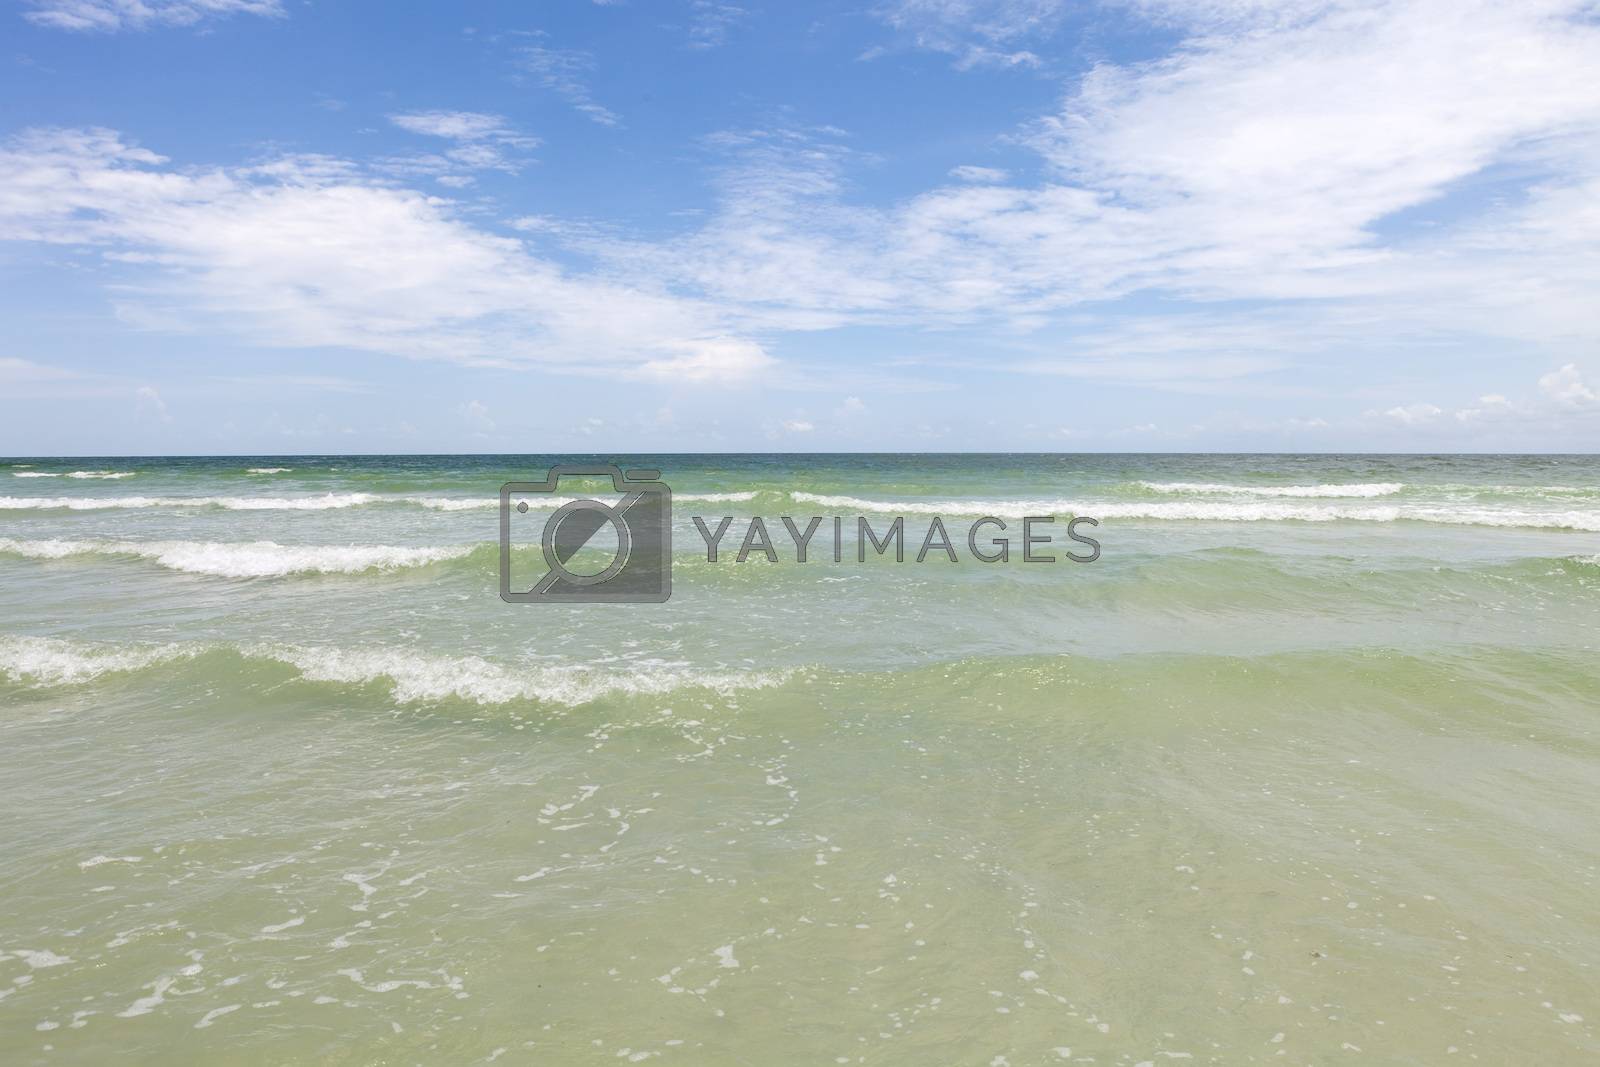 Royalty free image of Siesta Key Beach Sarasota Florida by graficallyminded